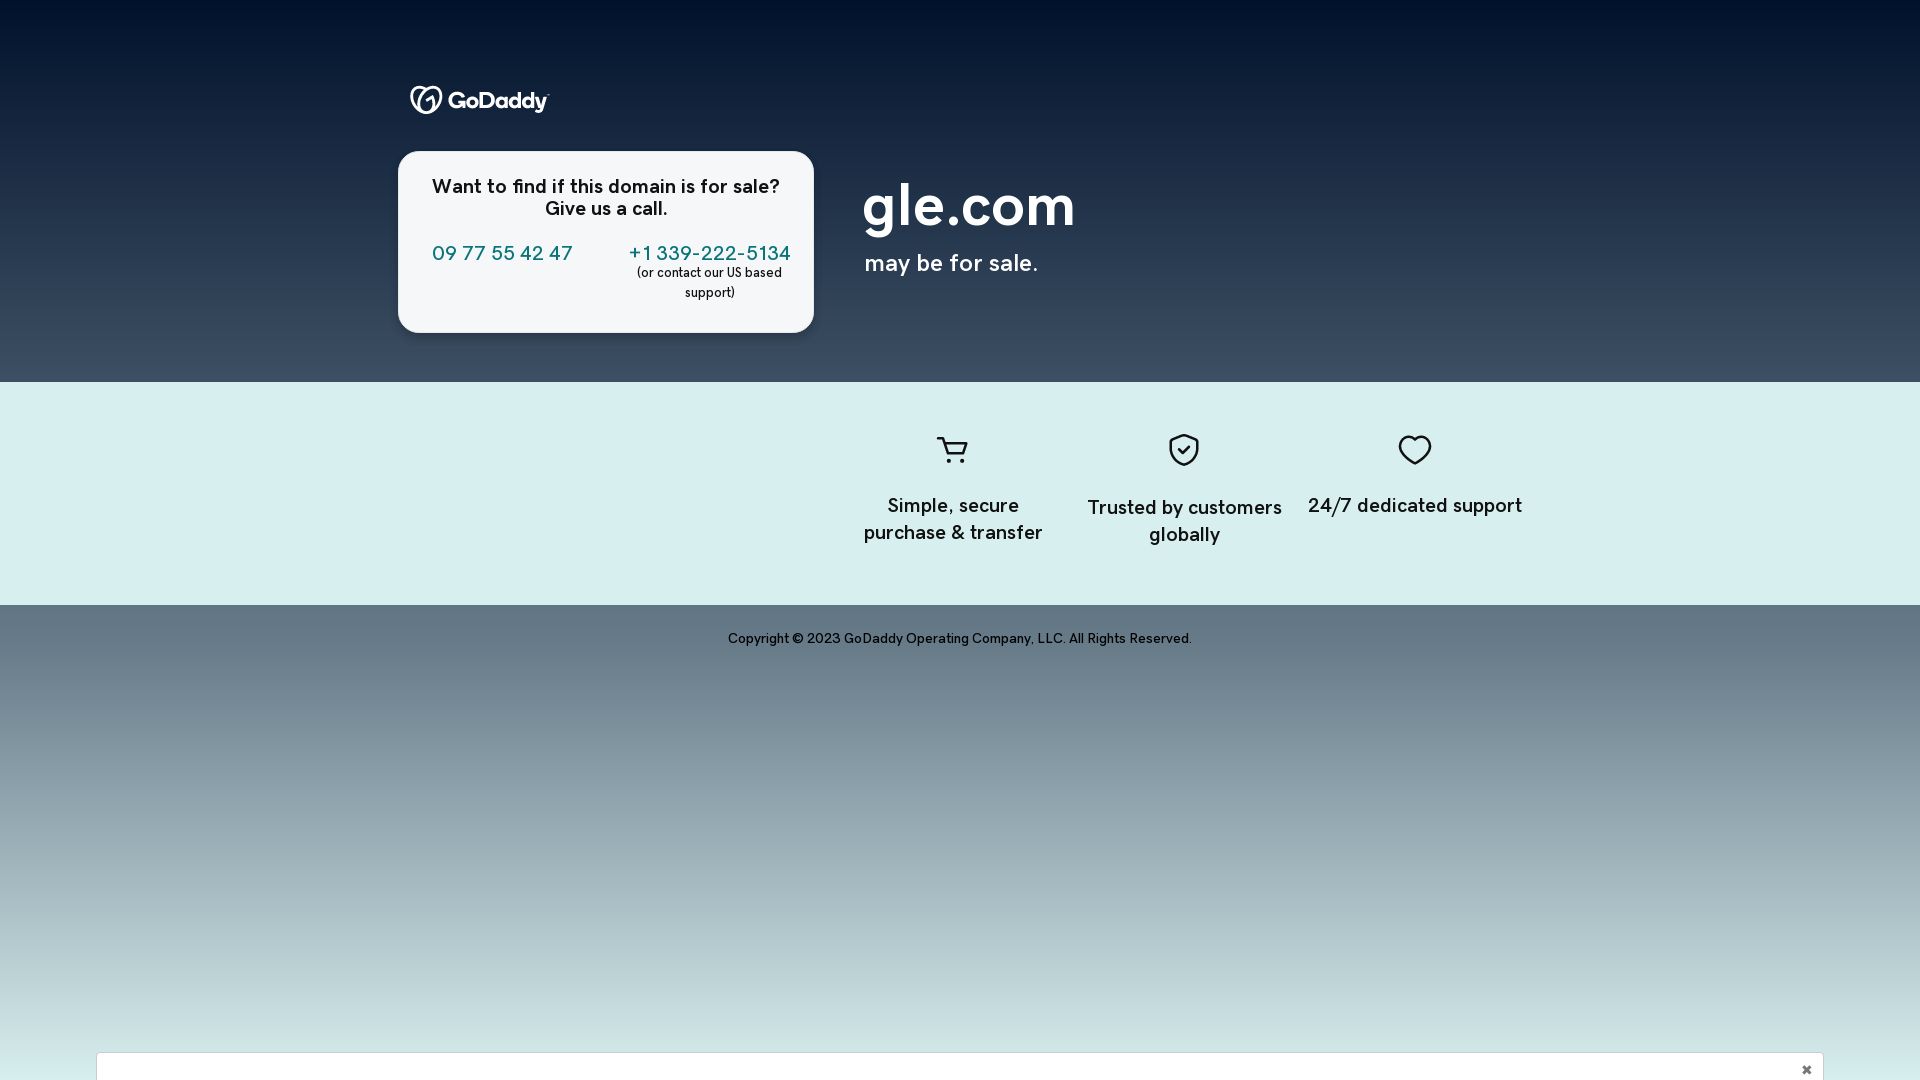 Website status gle.com is   ONLINE